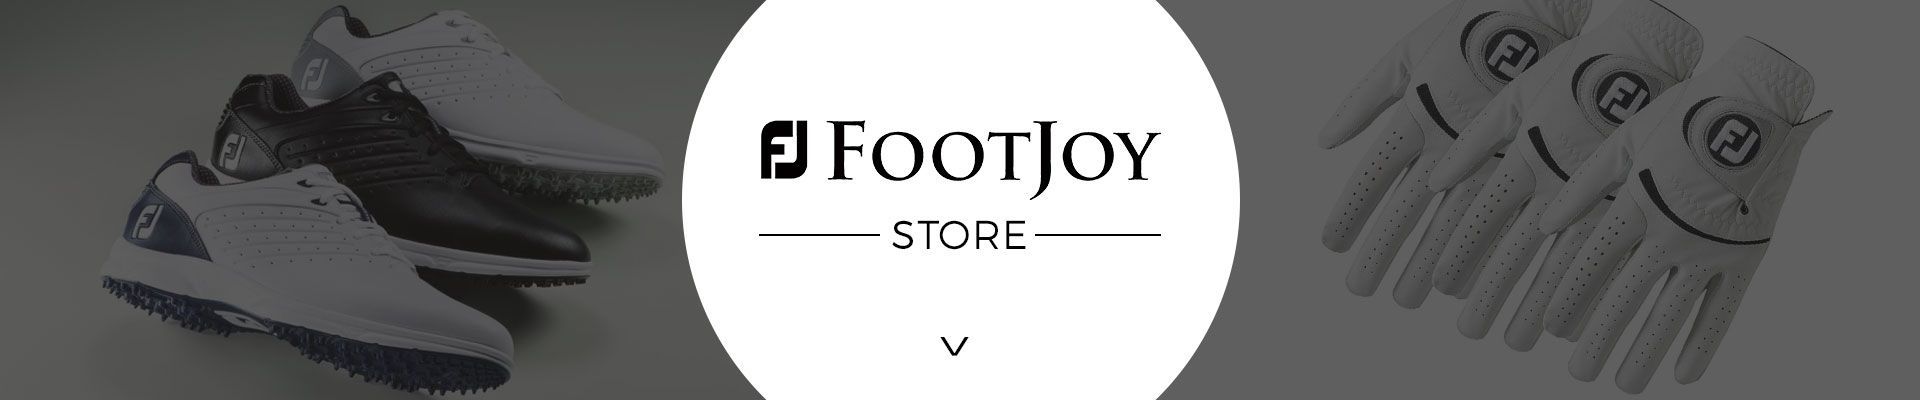 Footjoy Store